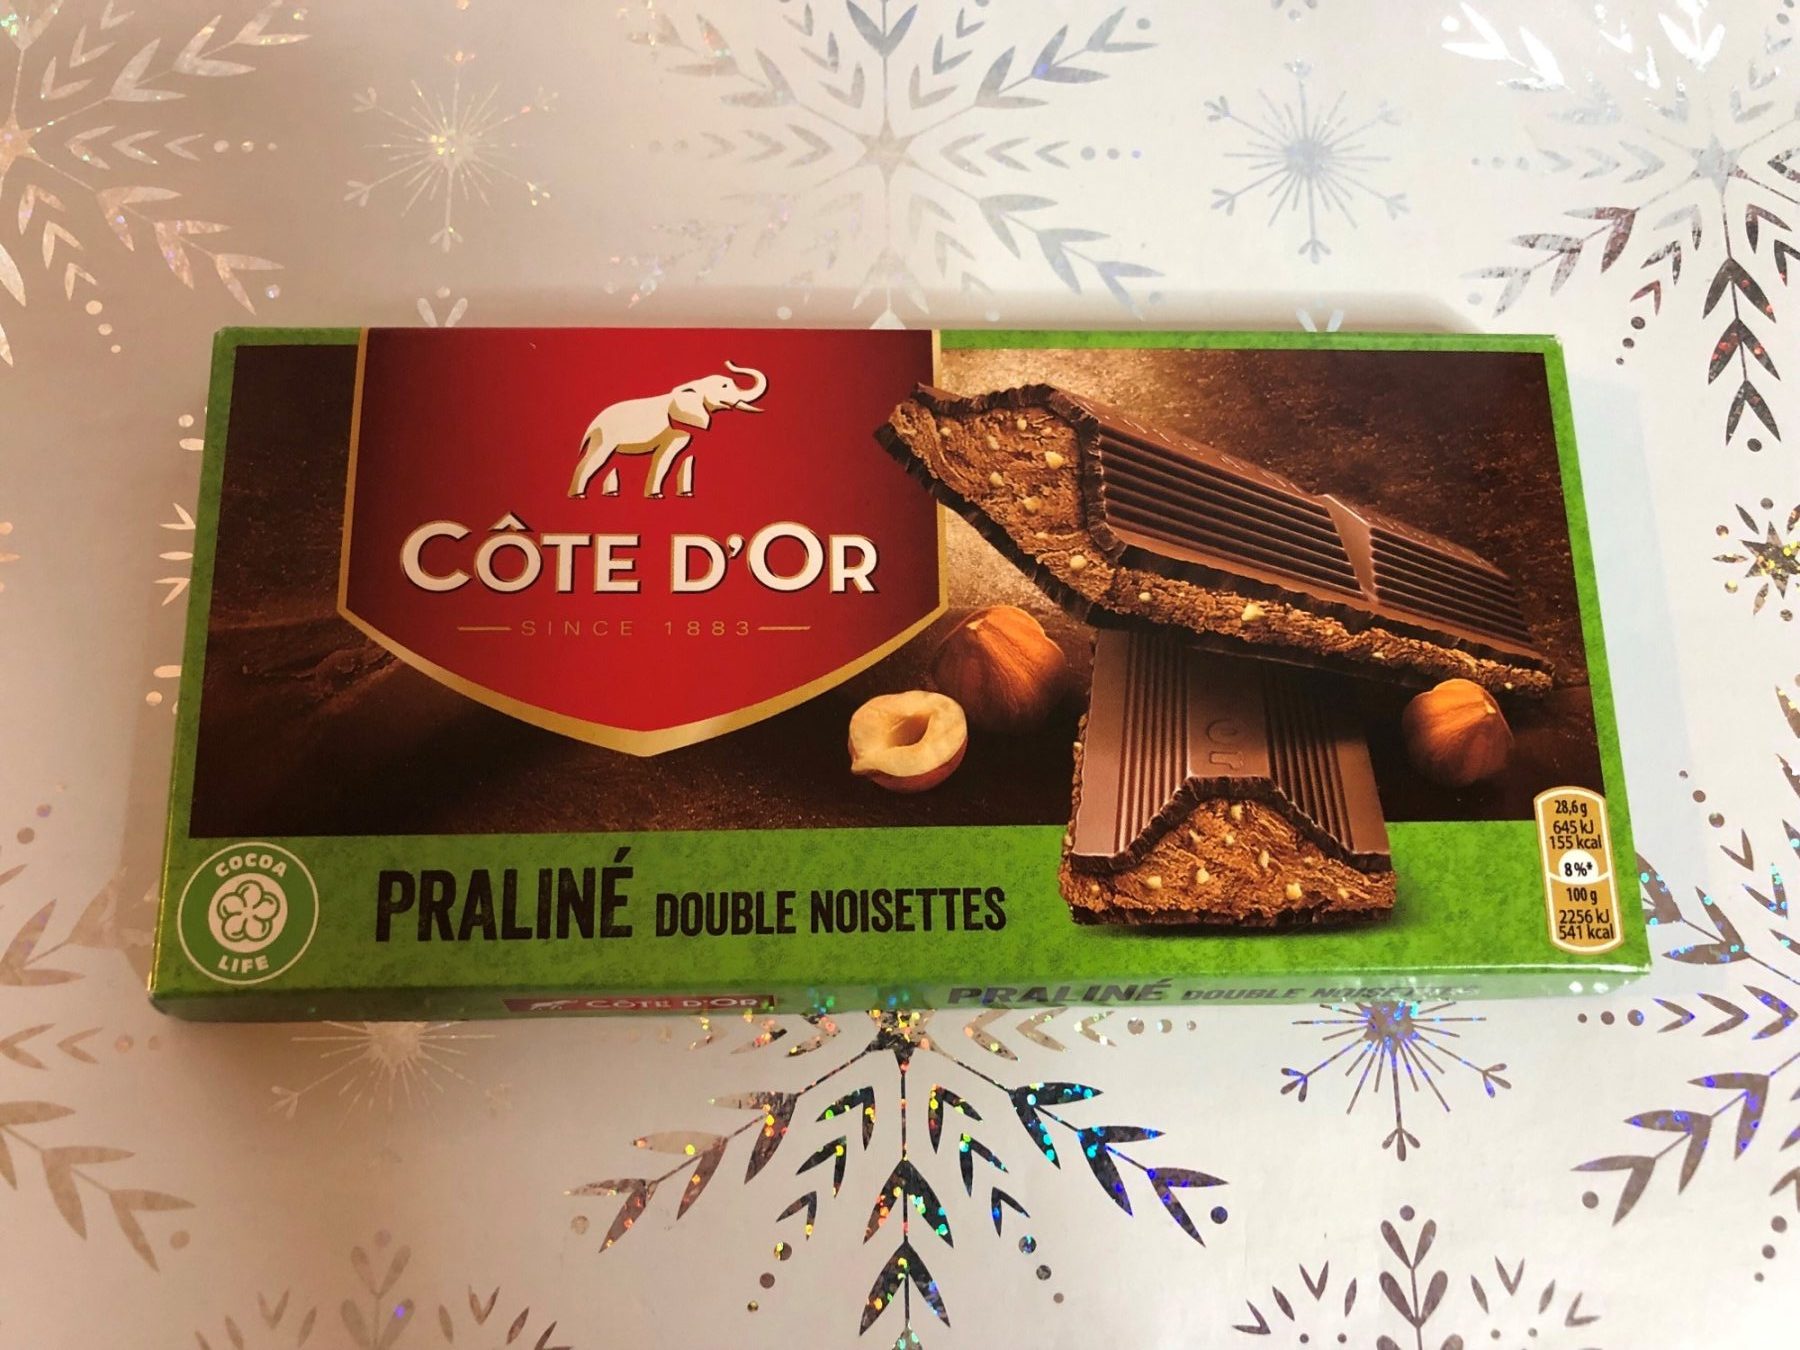 Cote D'Or Praline 'Double noisettes' milk chocolate